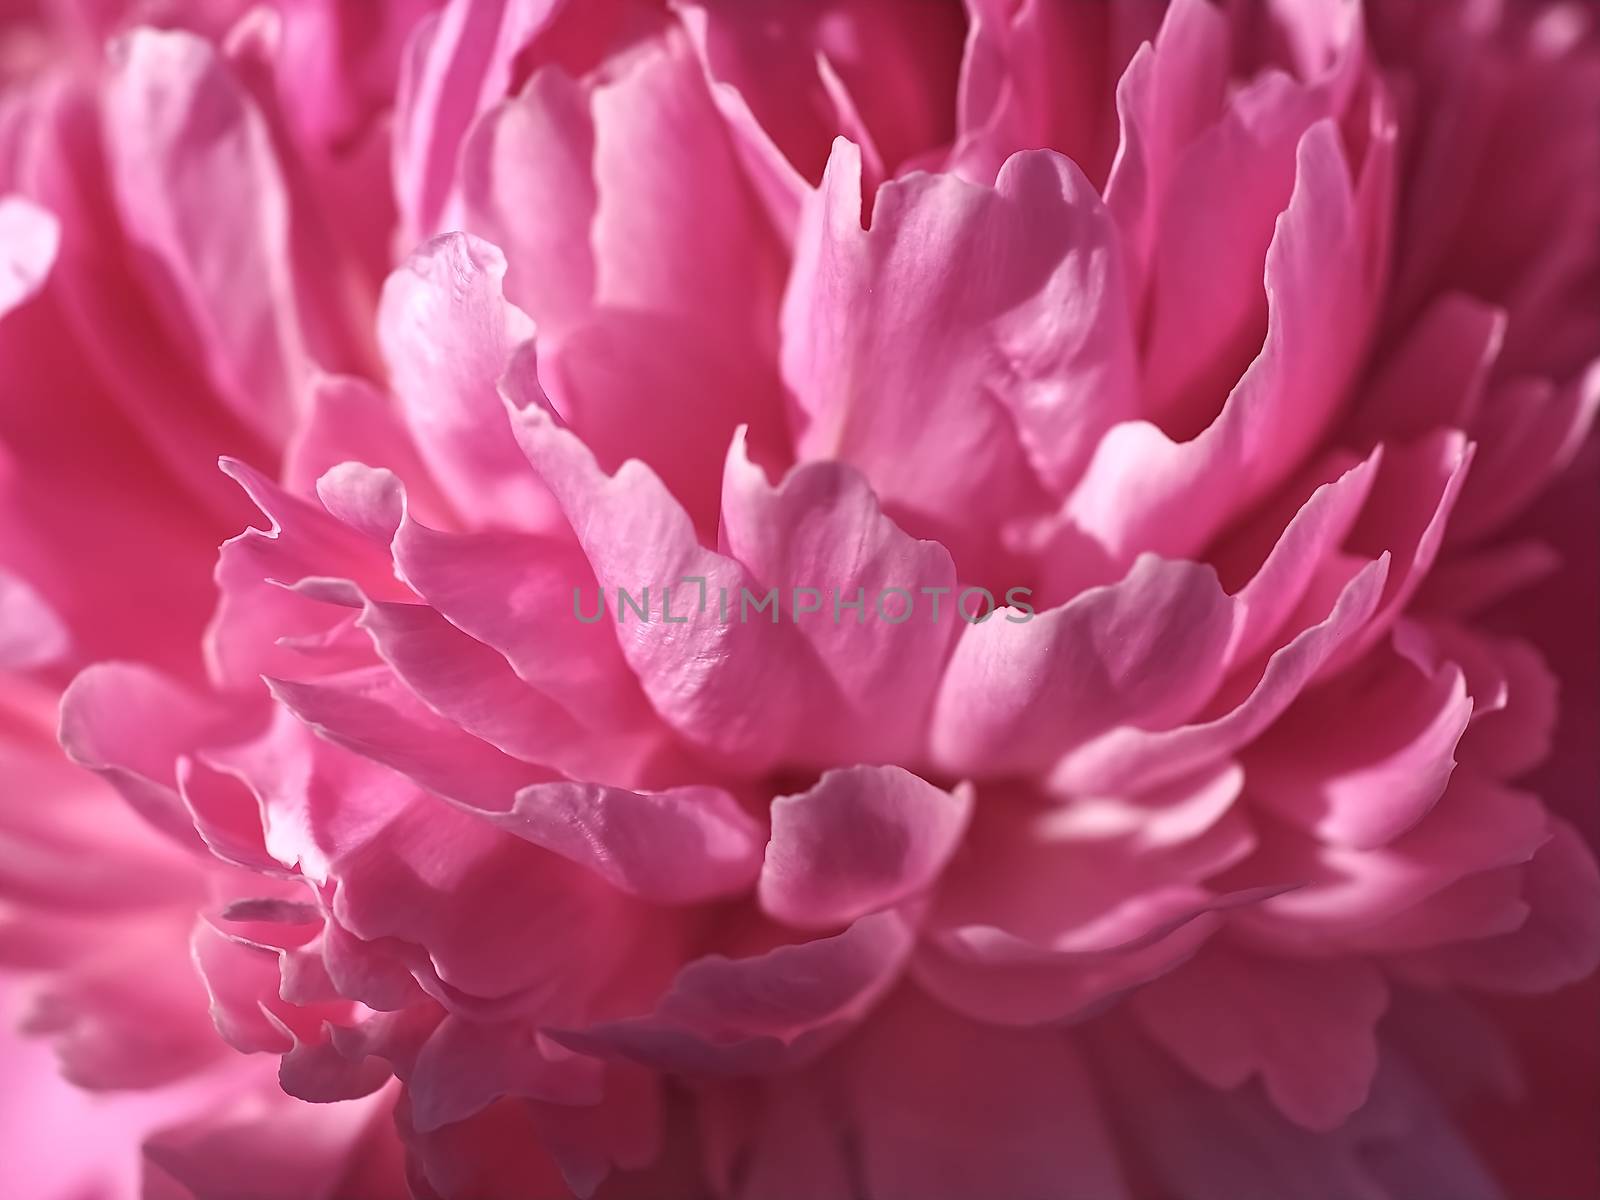 Macro of a pink peony flower